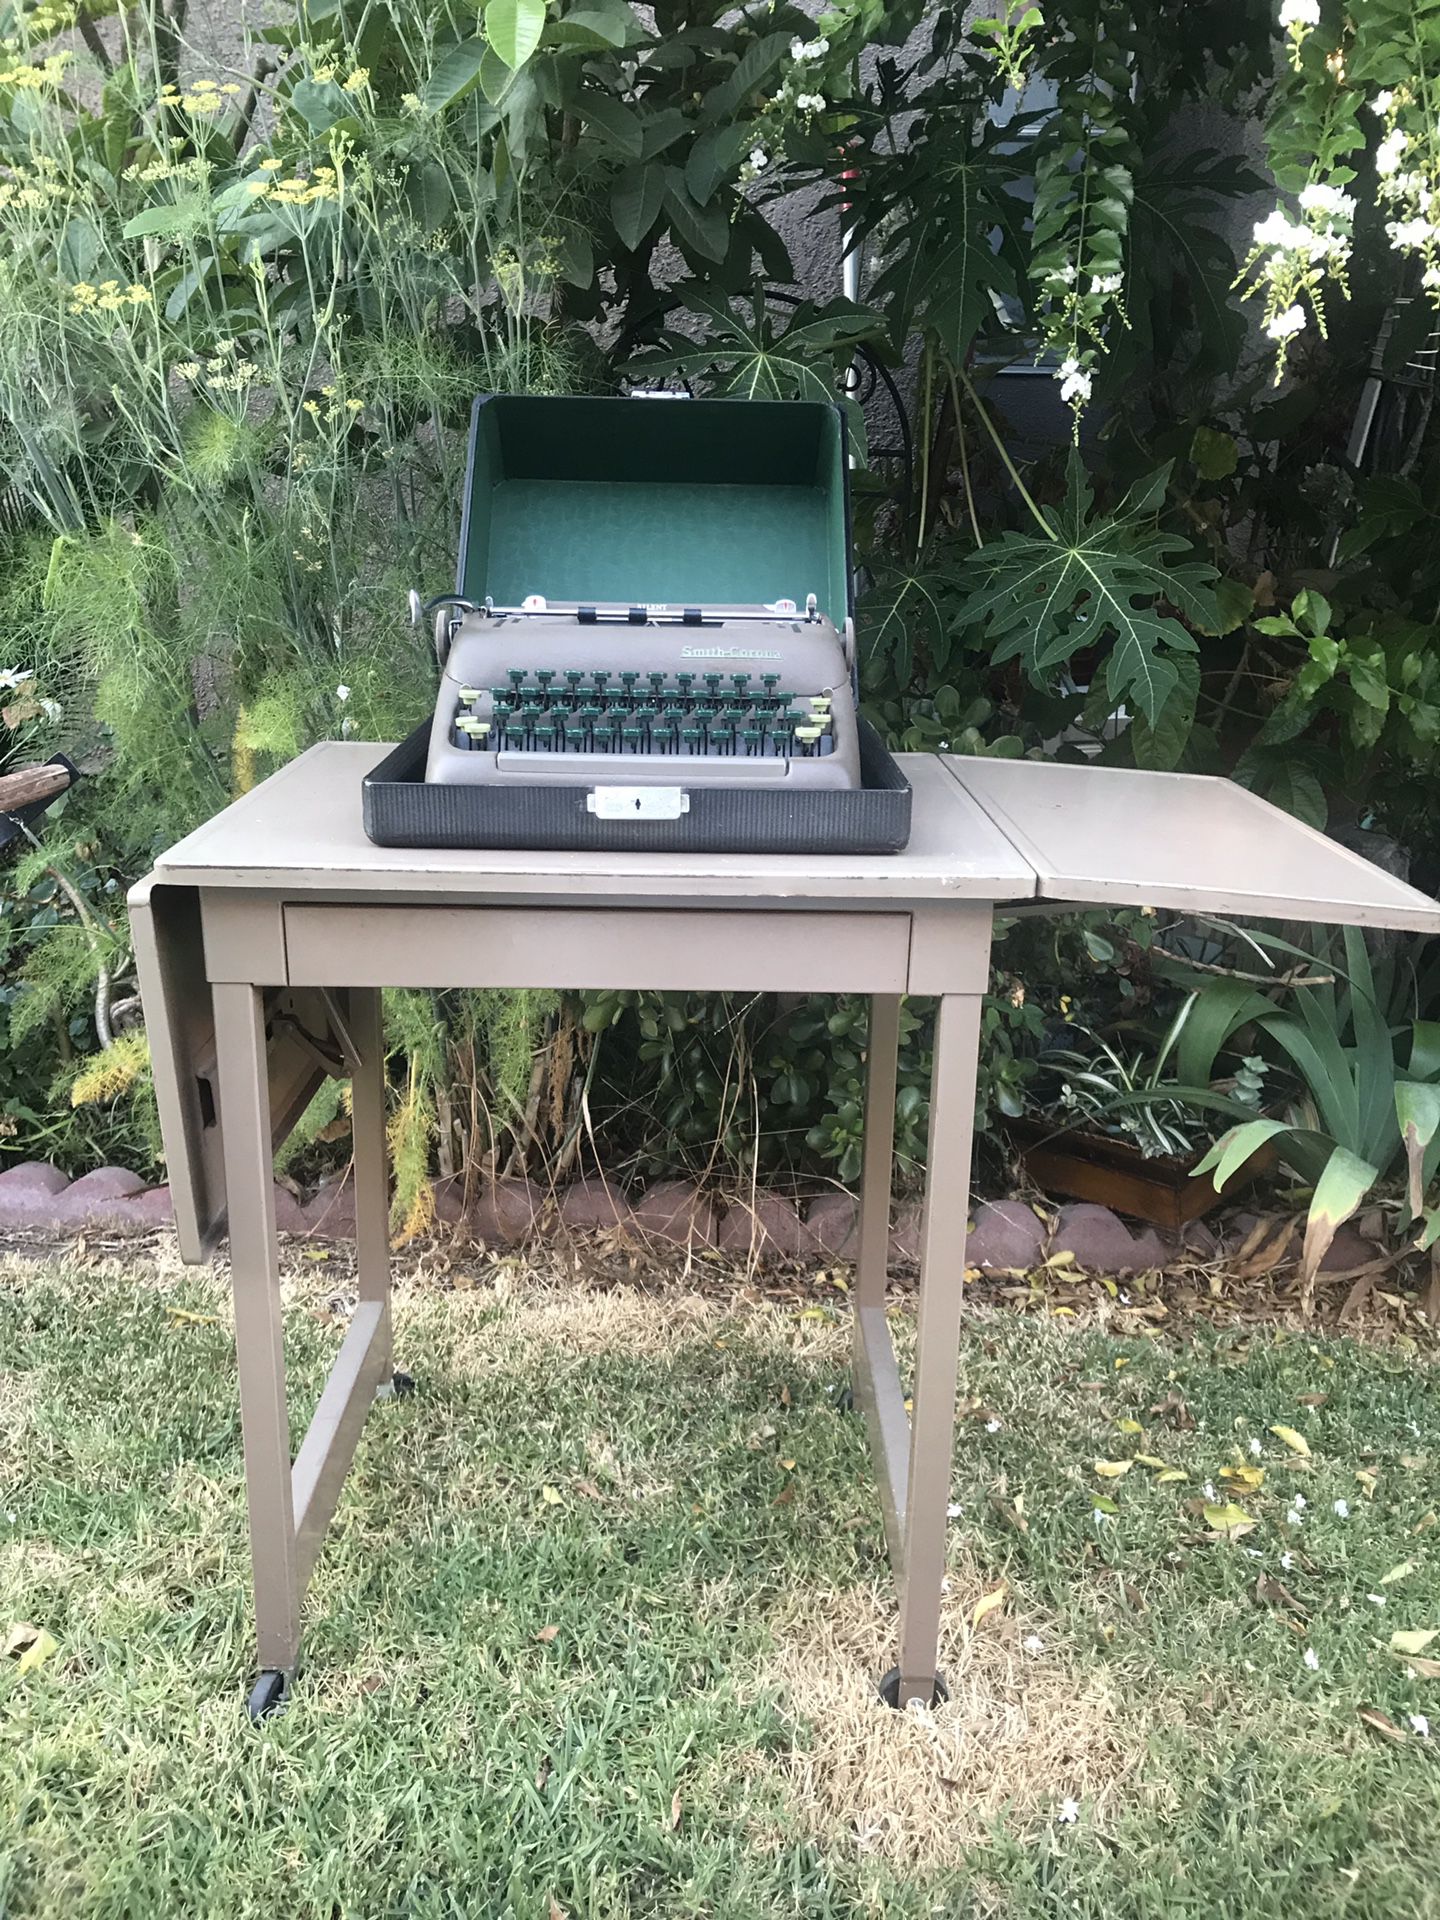 Vintage typewriter smith corona